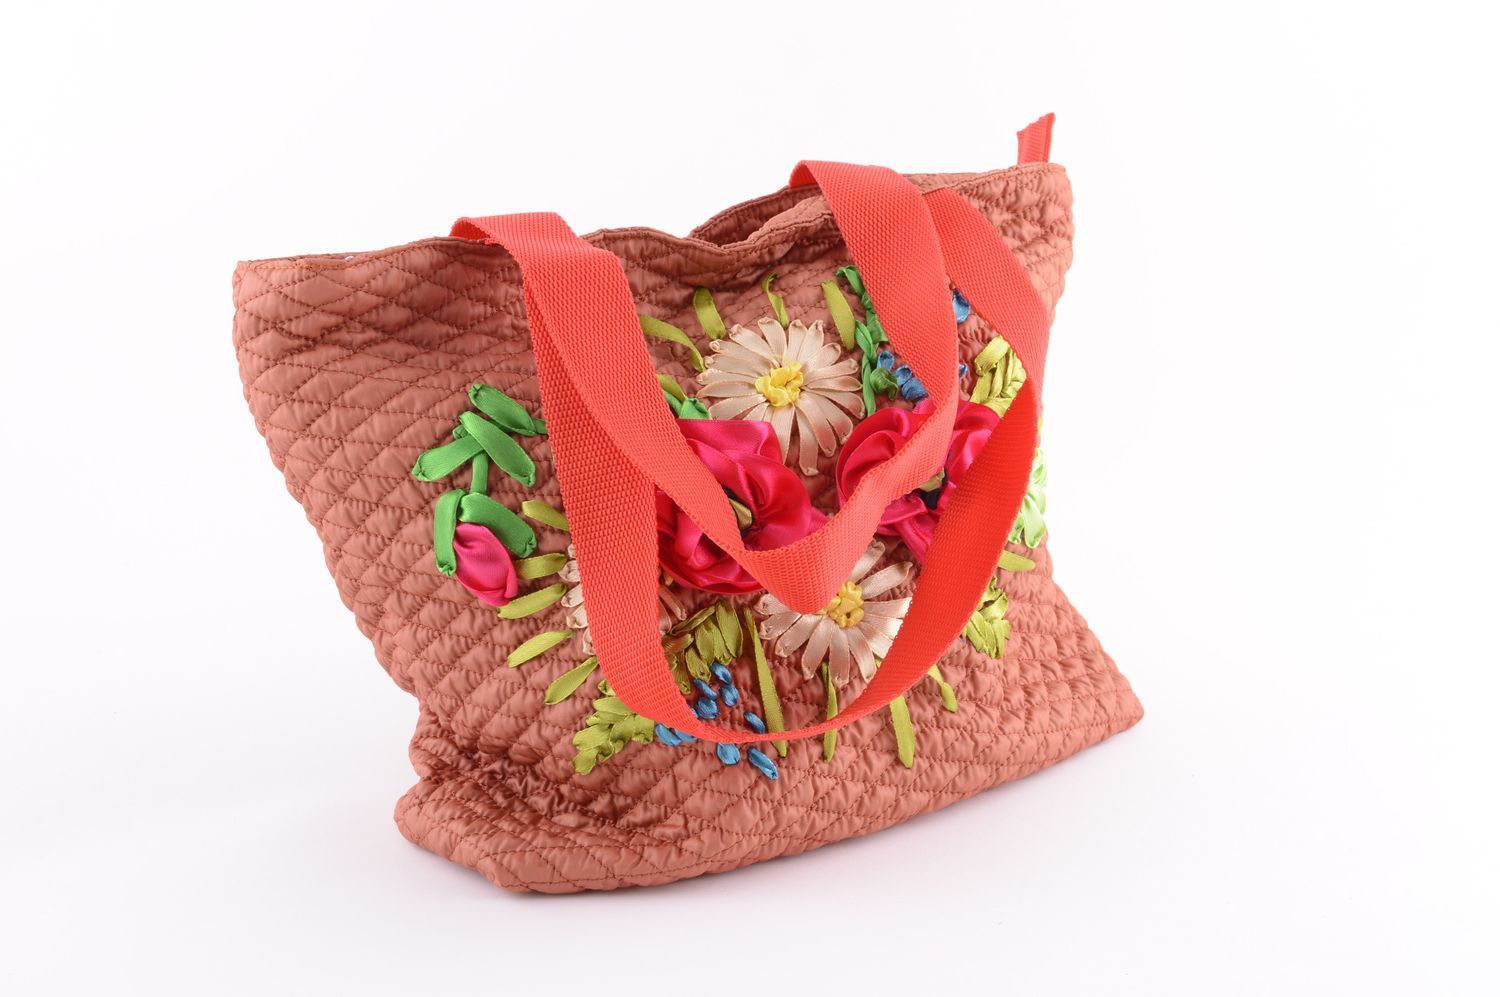 Handmade purse with embroidery textile bag fabric stylish handbag for women photo 1